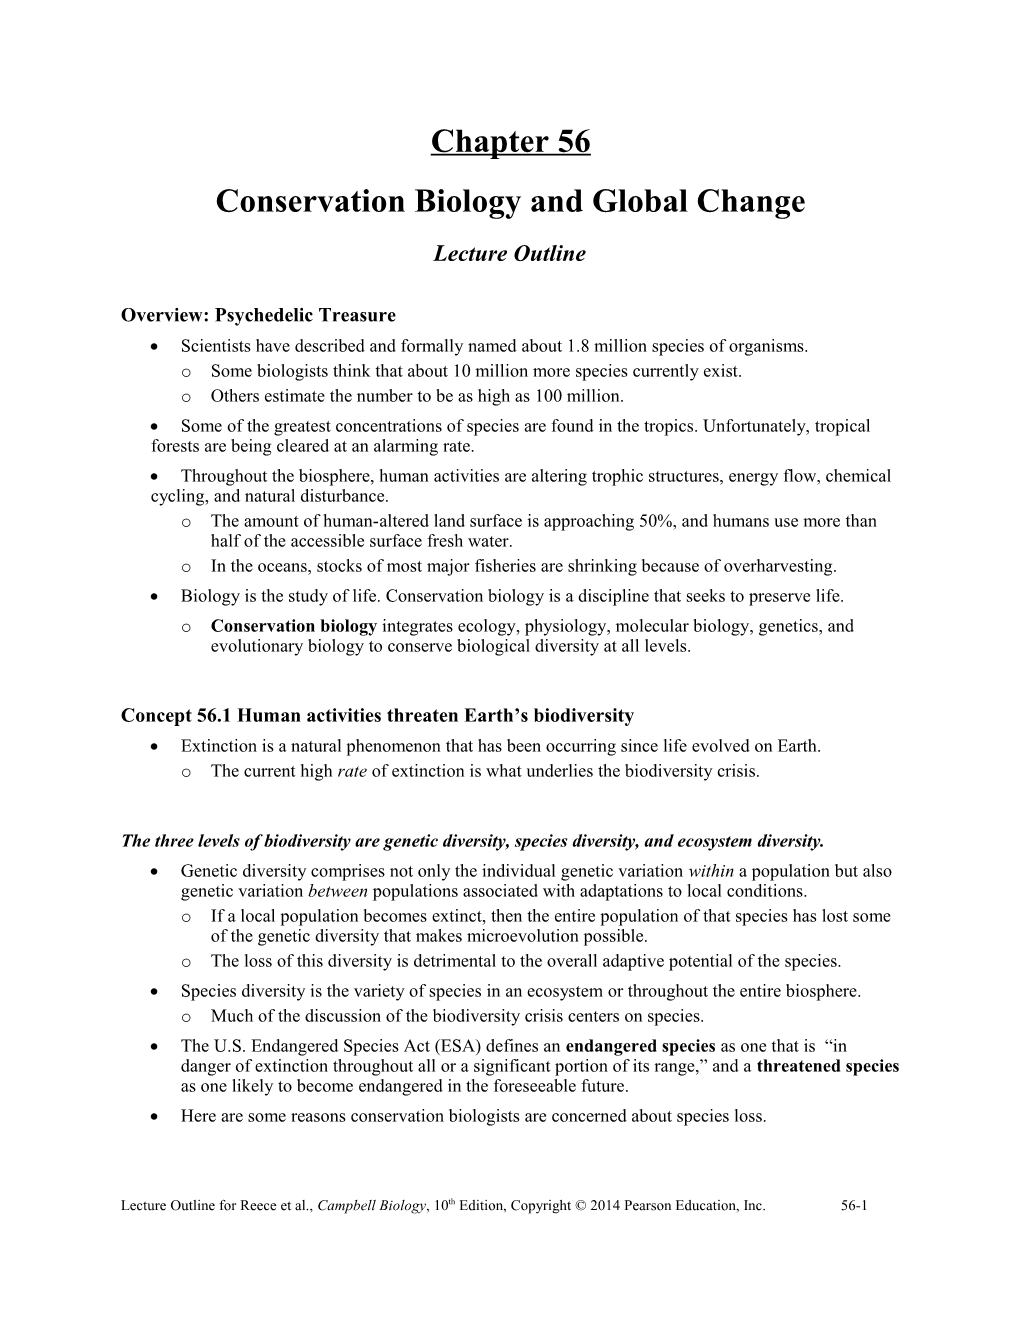 Conservation Biology and Global Change